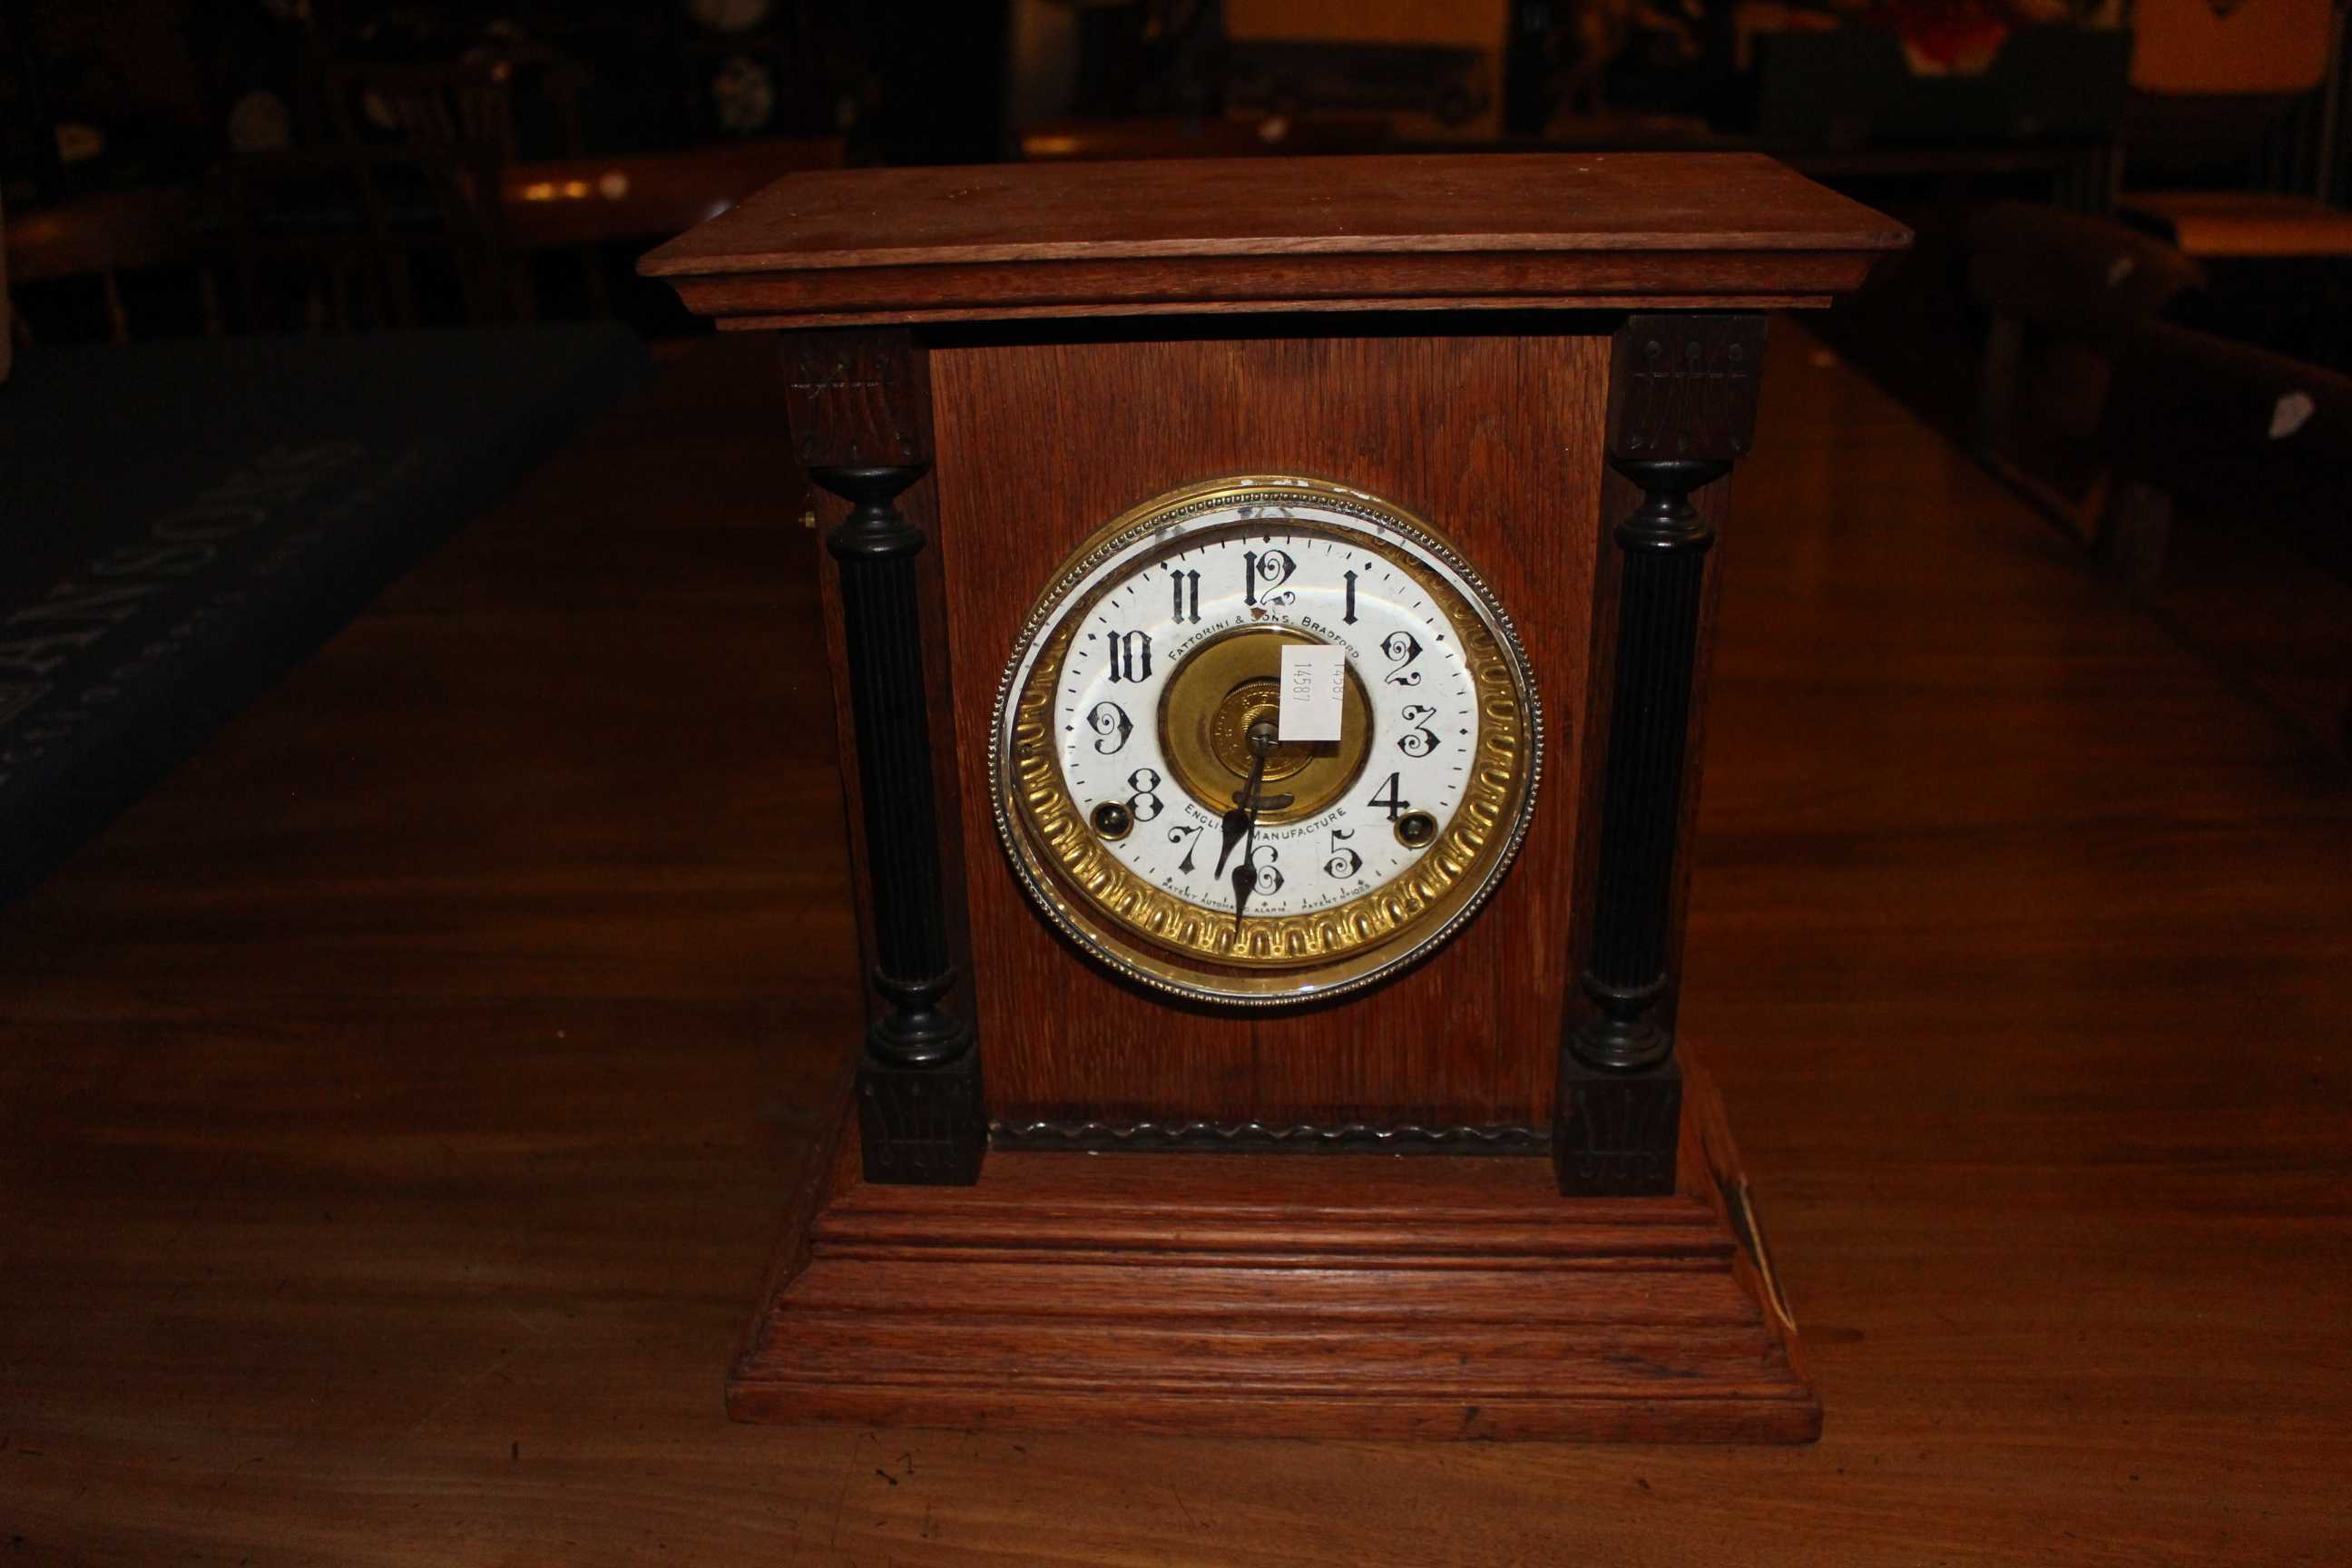 Antique Thomas Fattorini & Son Two train mantel clock with alarm facility, enamel face but small